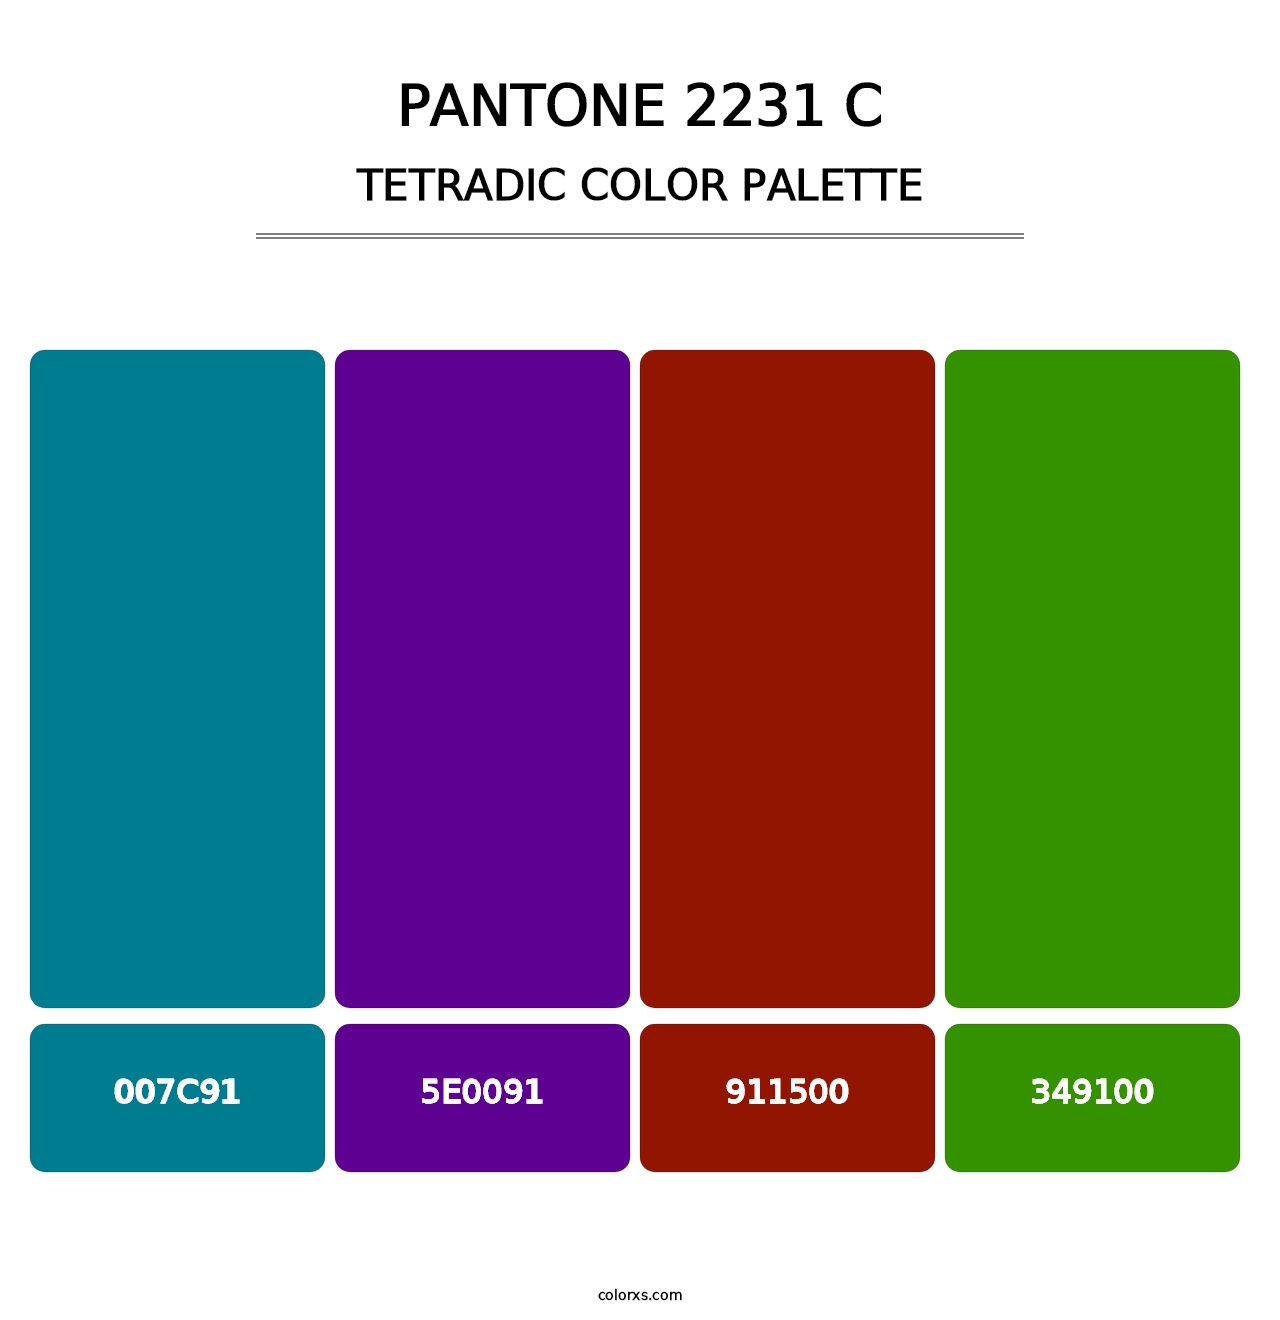 PANTONE 2231 C - Tetradic Color Palette